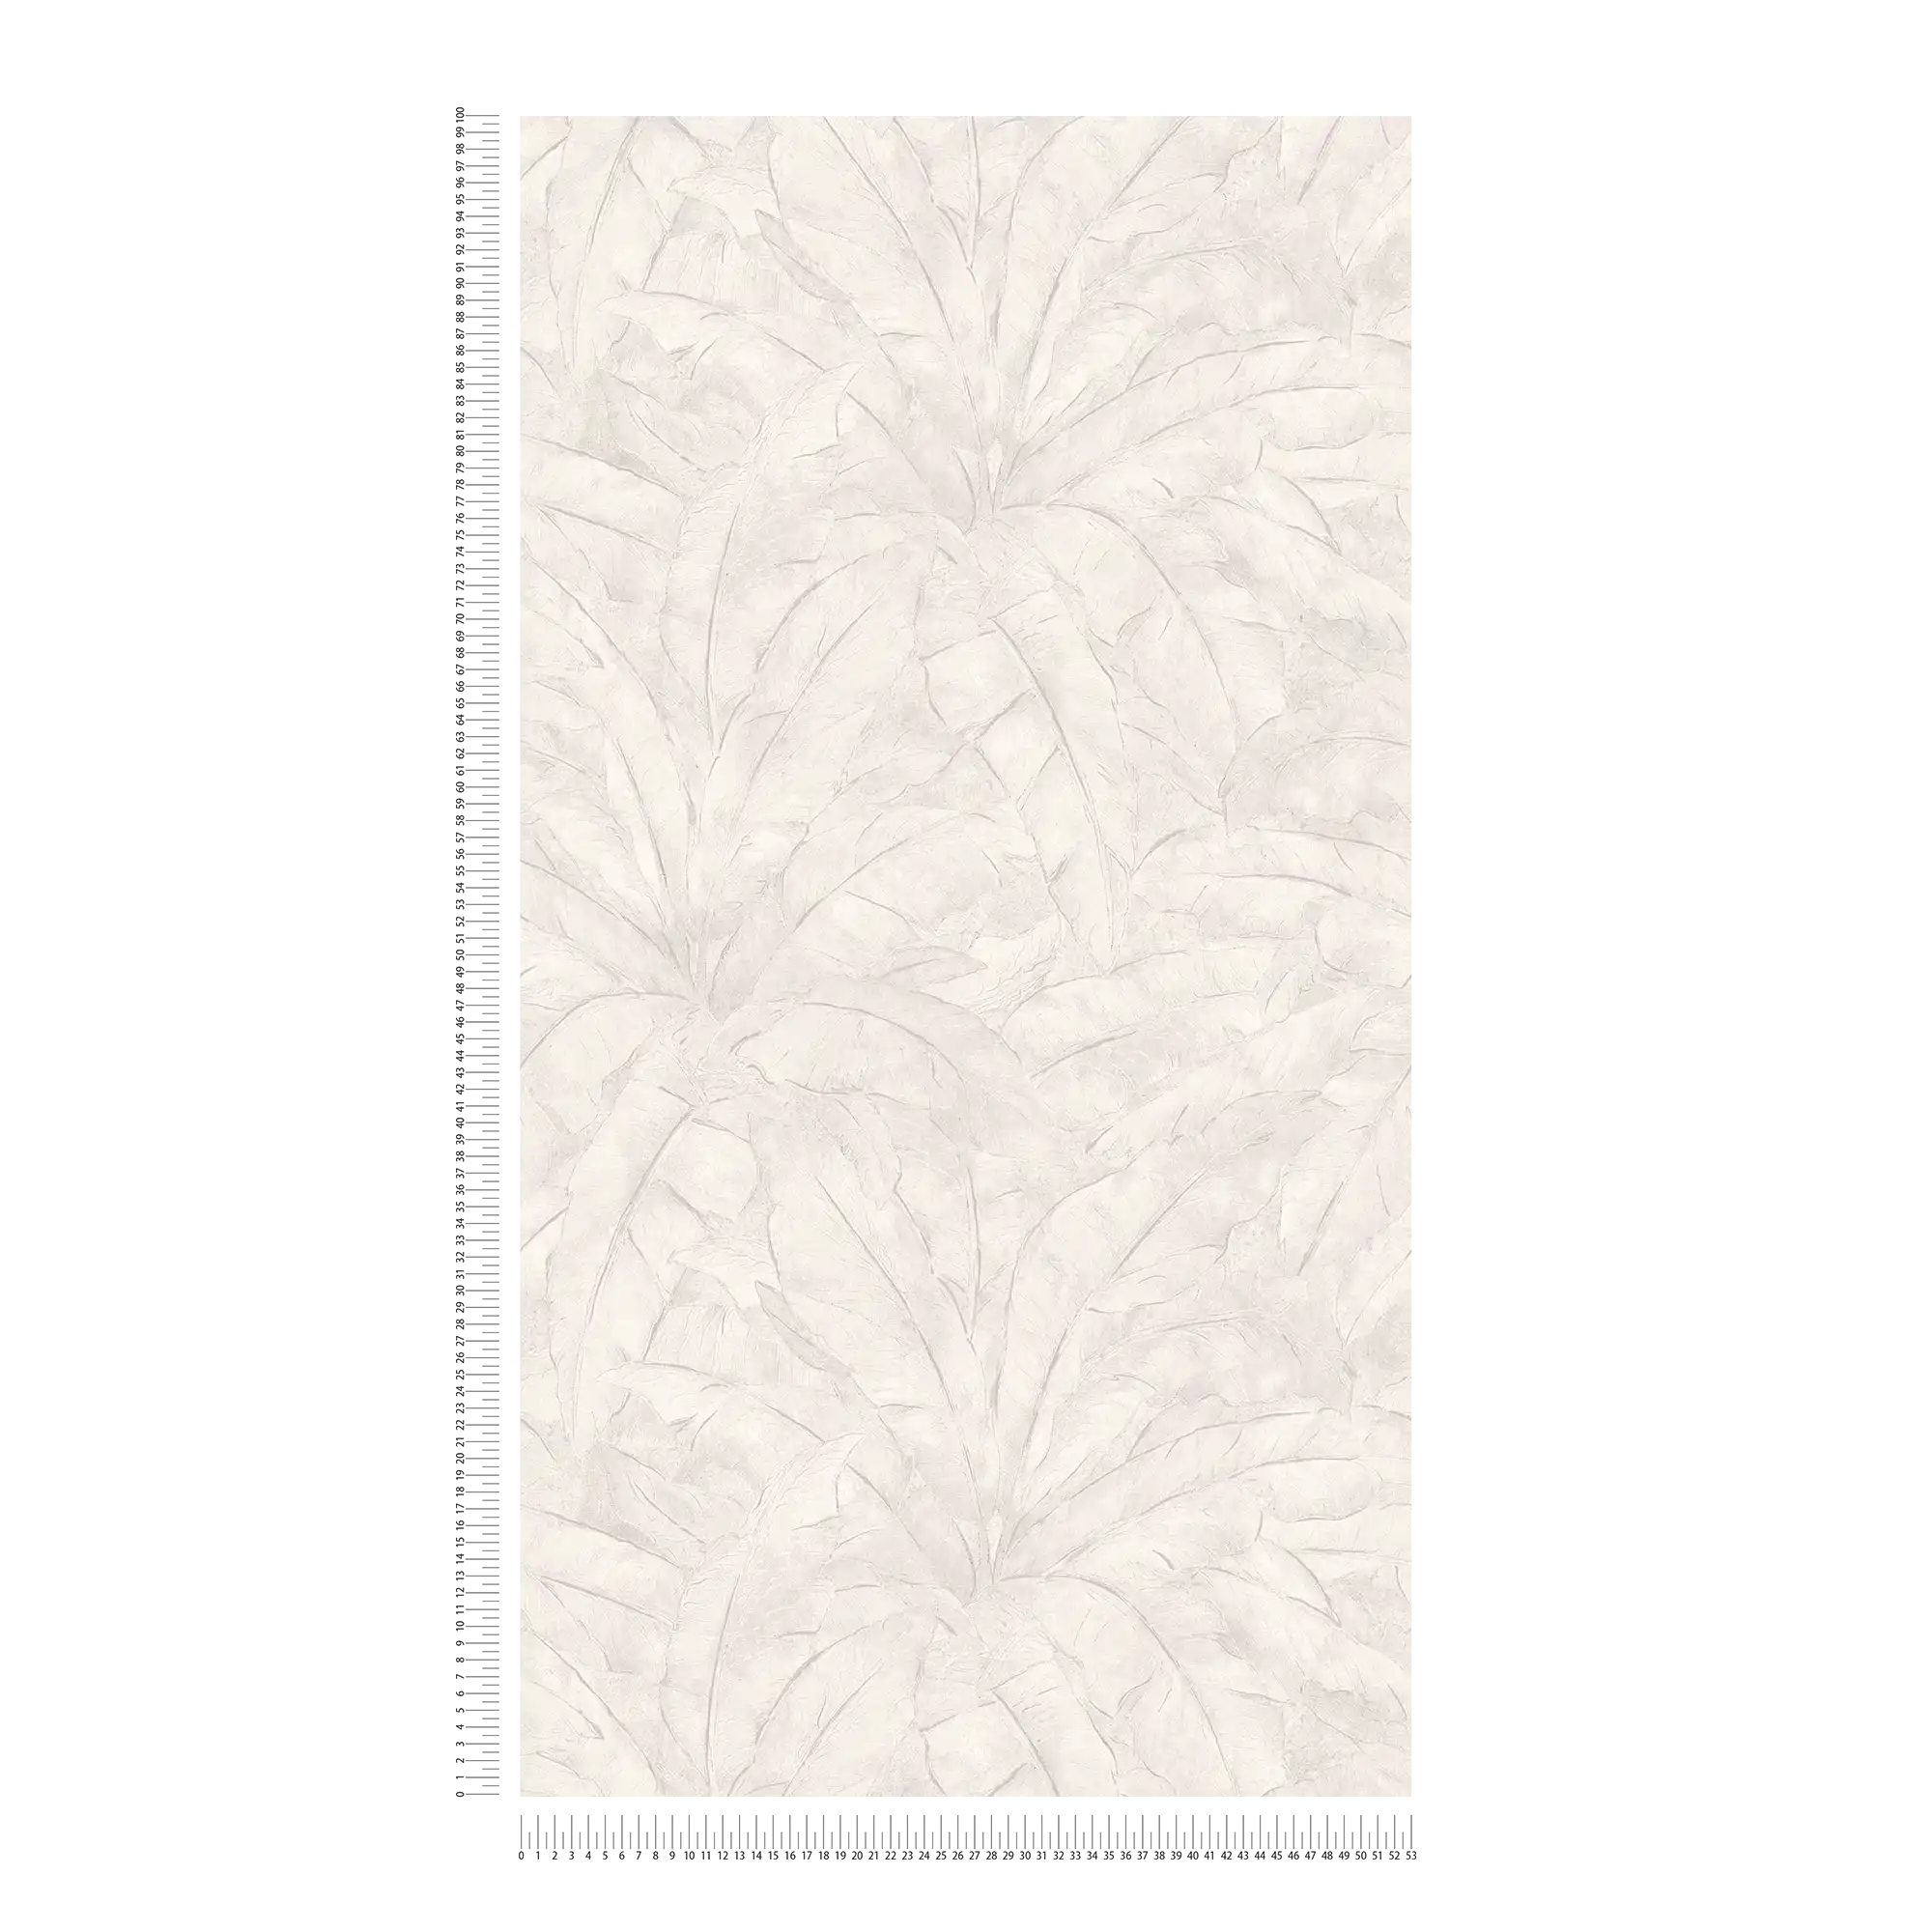             Jungle wallpaper with silver accent - grey, silver, white
        